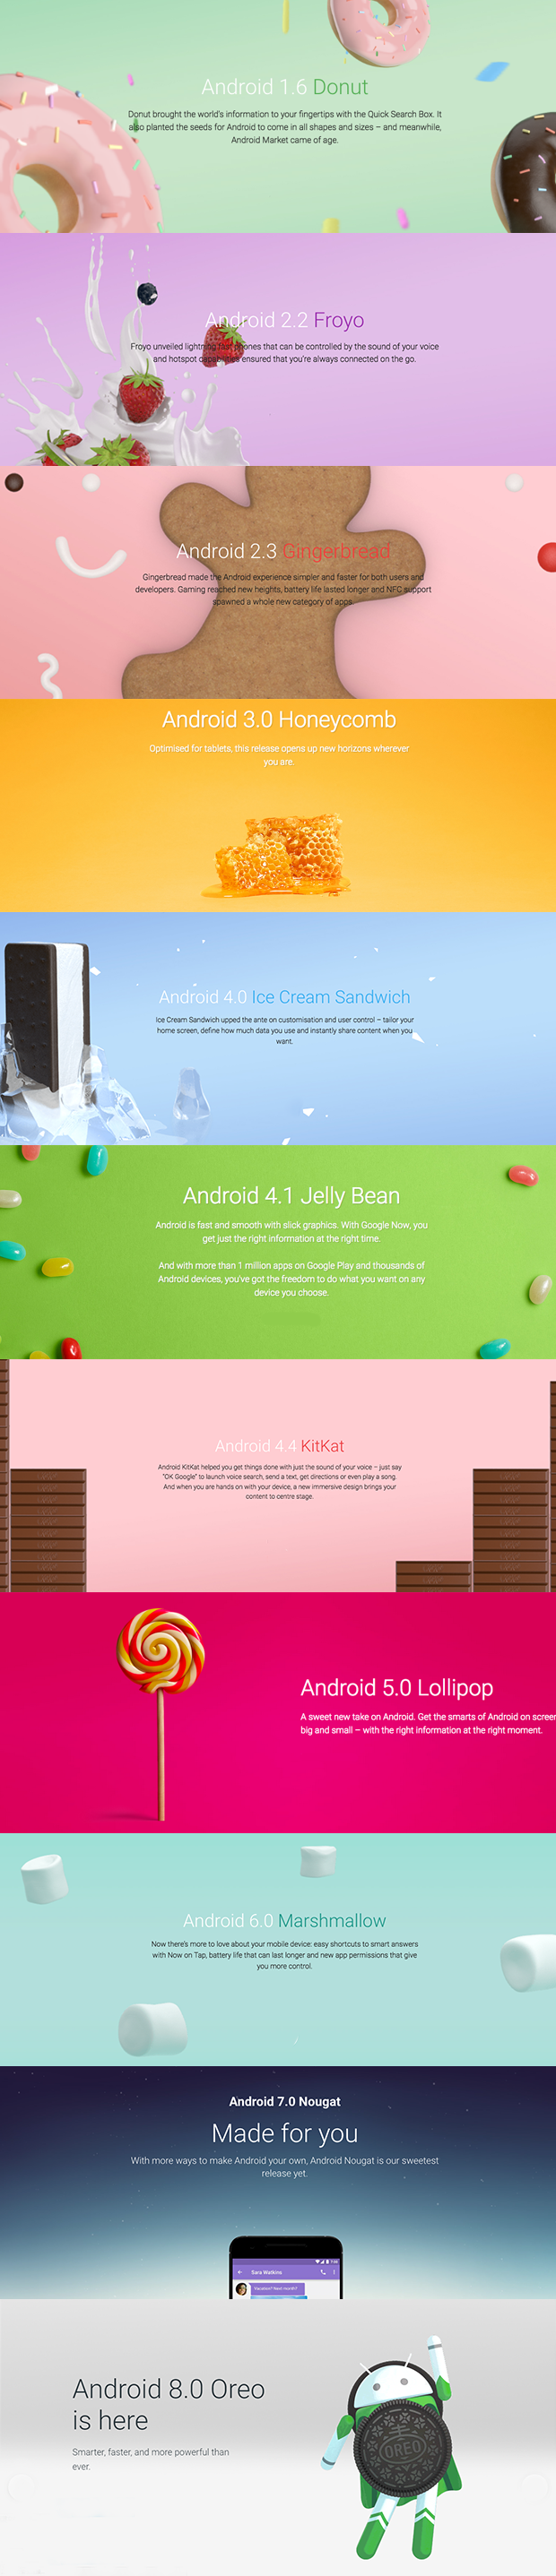 Android O 真叫奥利奥，这 15 个重要新变化你该知道